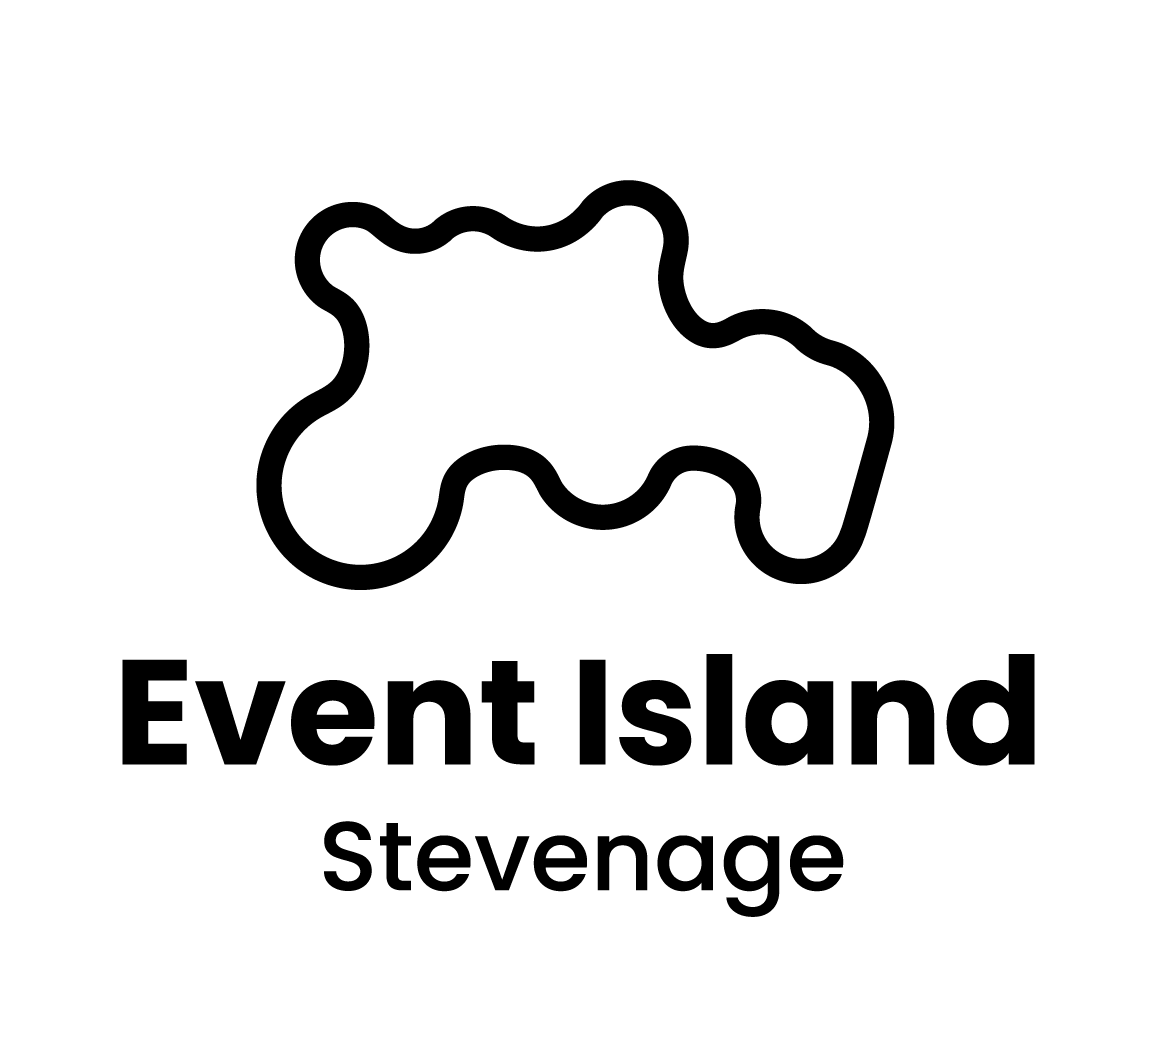 Event Island Stevenage opening on Saturday 29 October